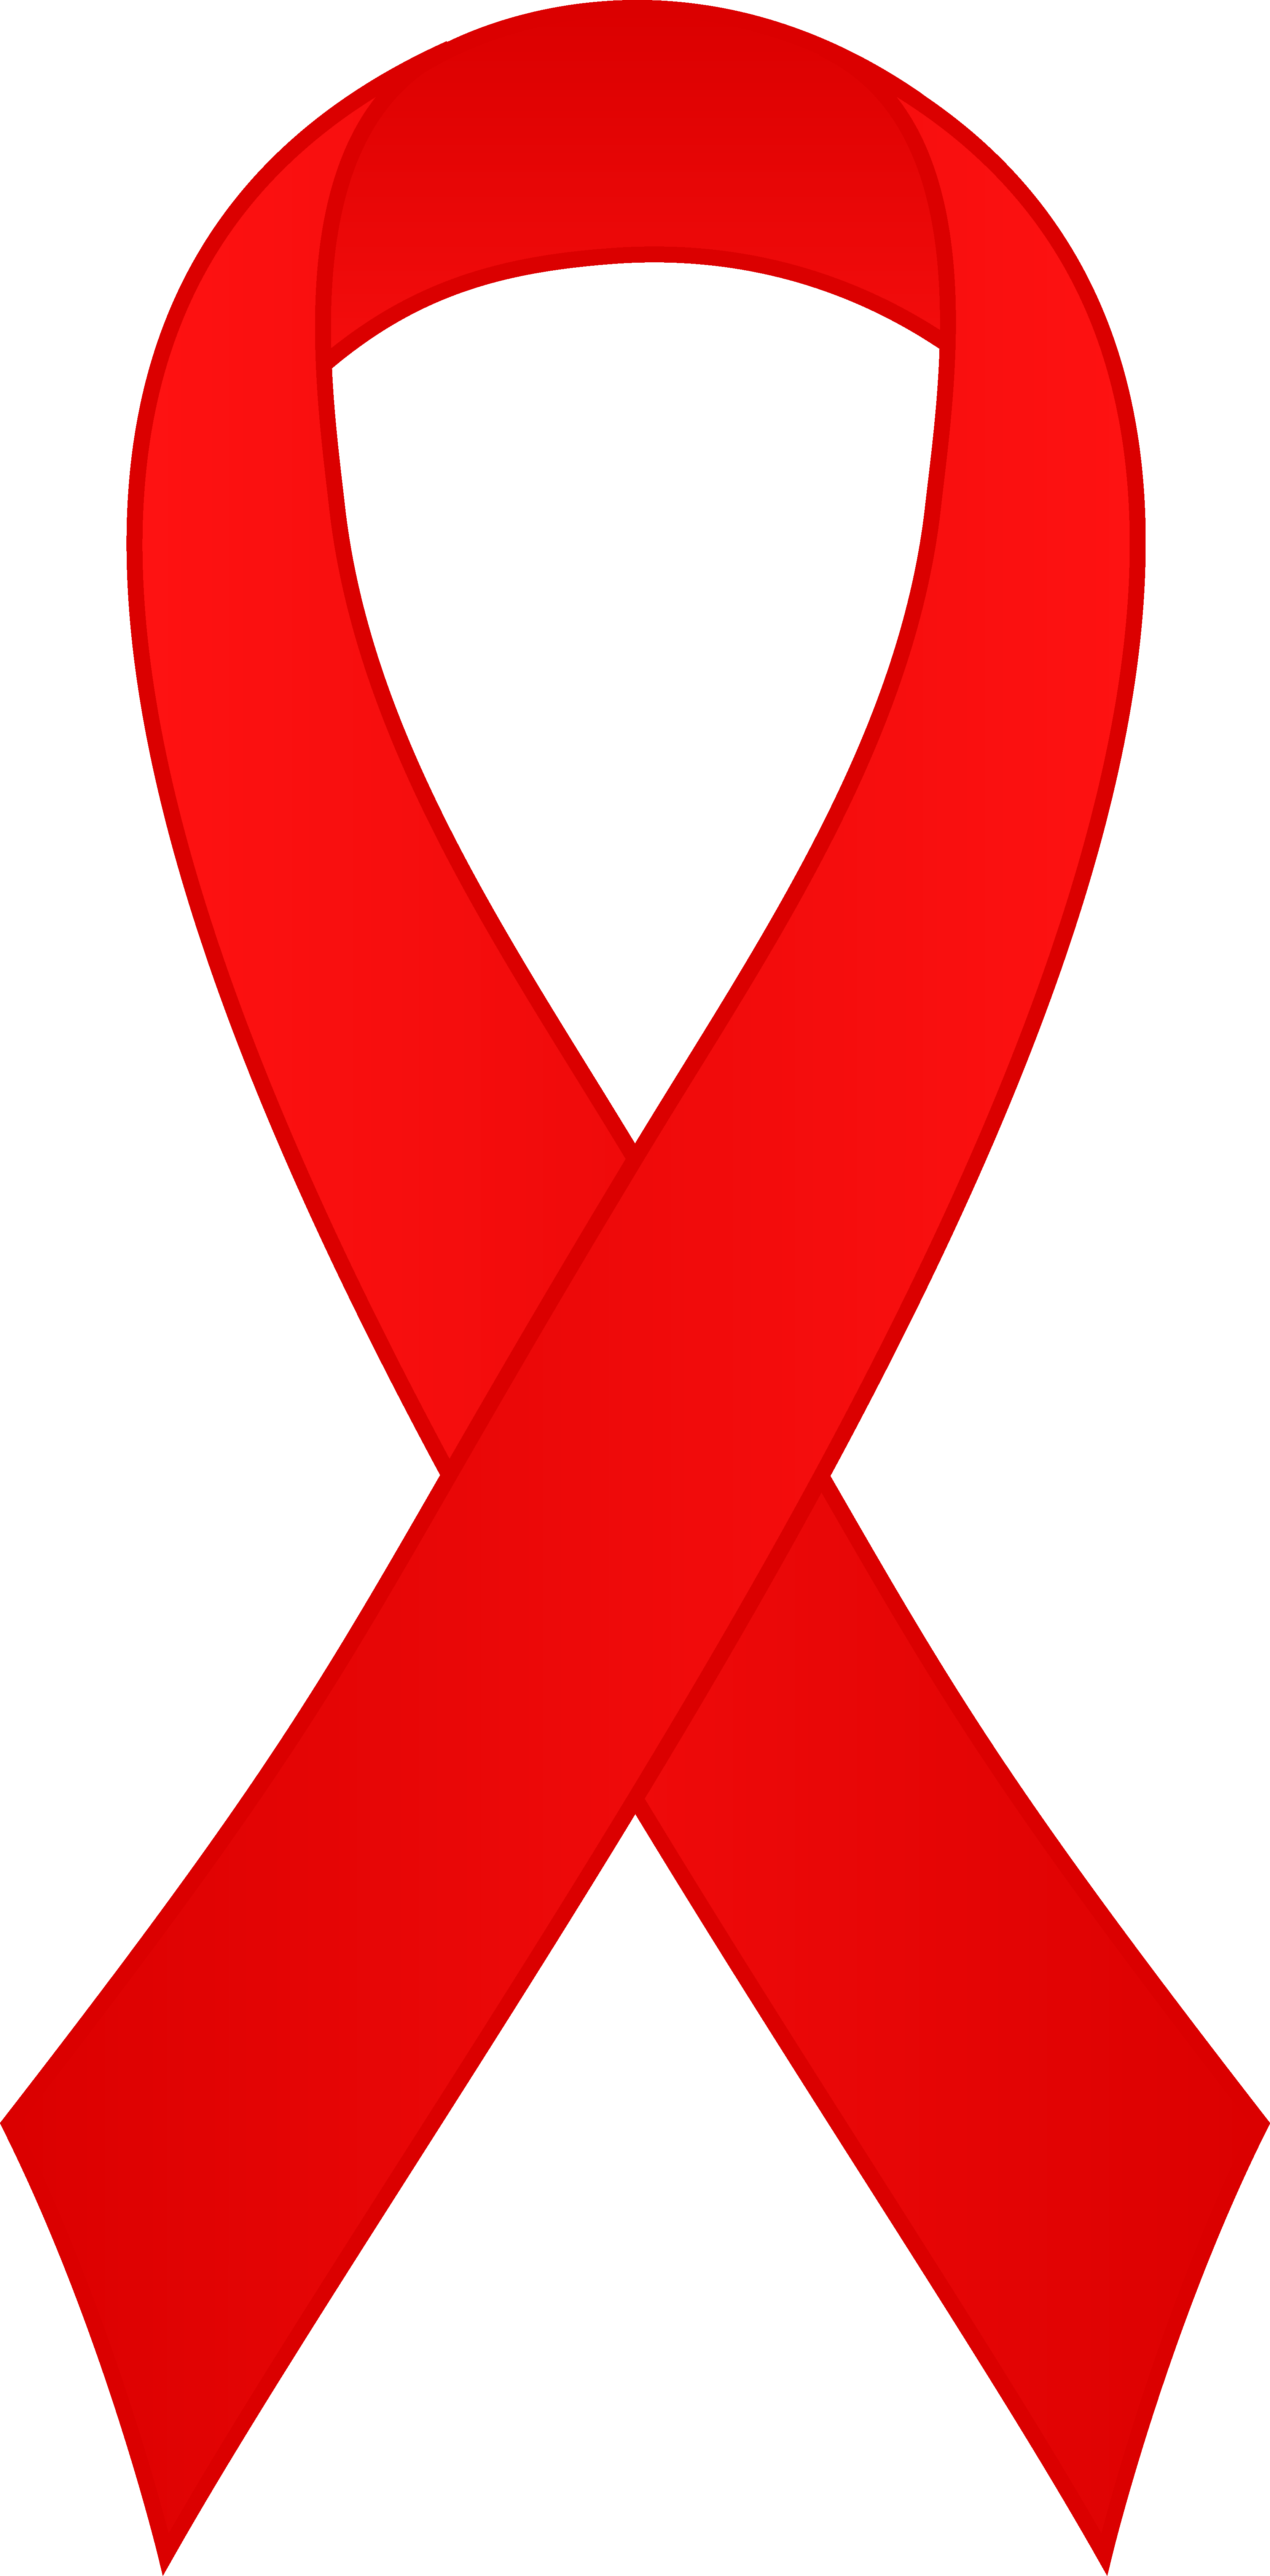 Aids ribbon clip art